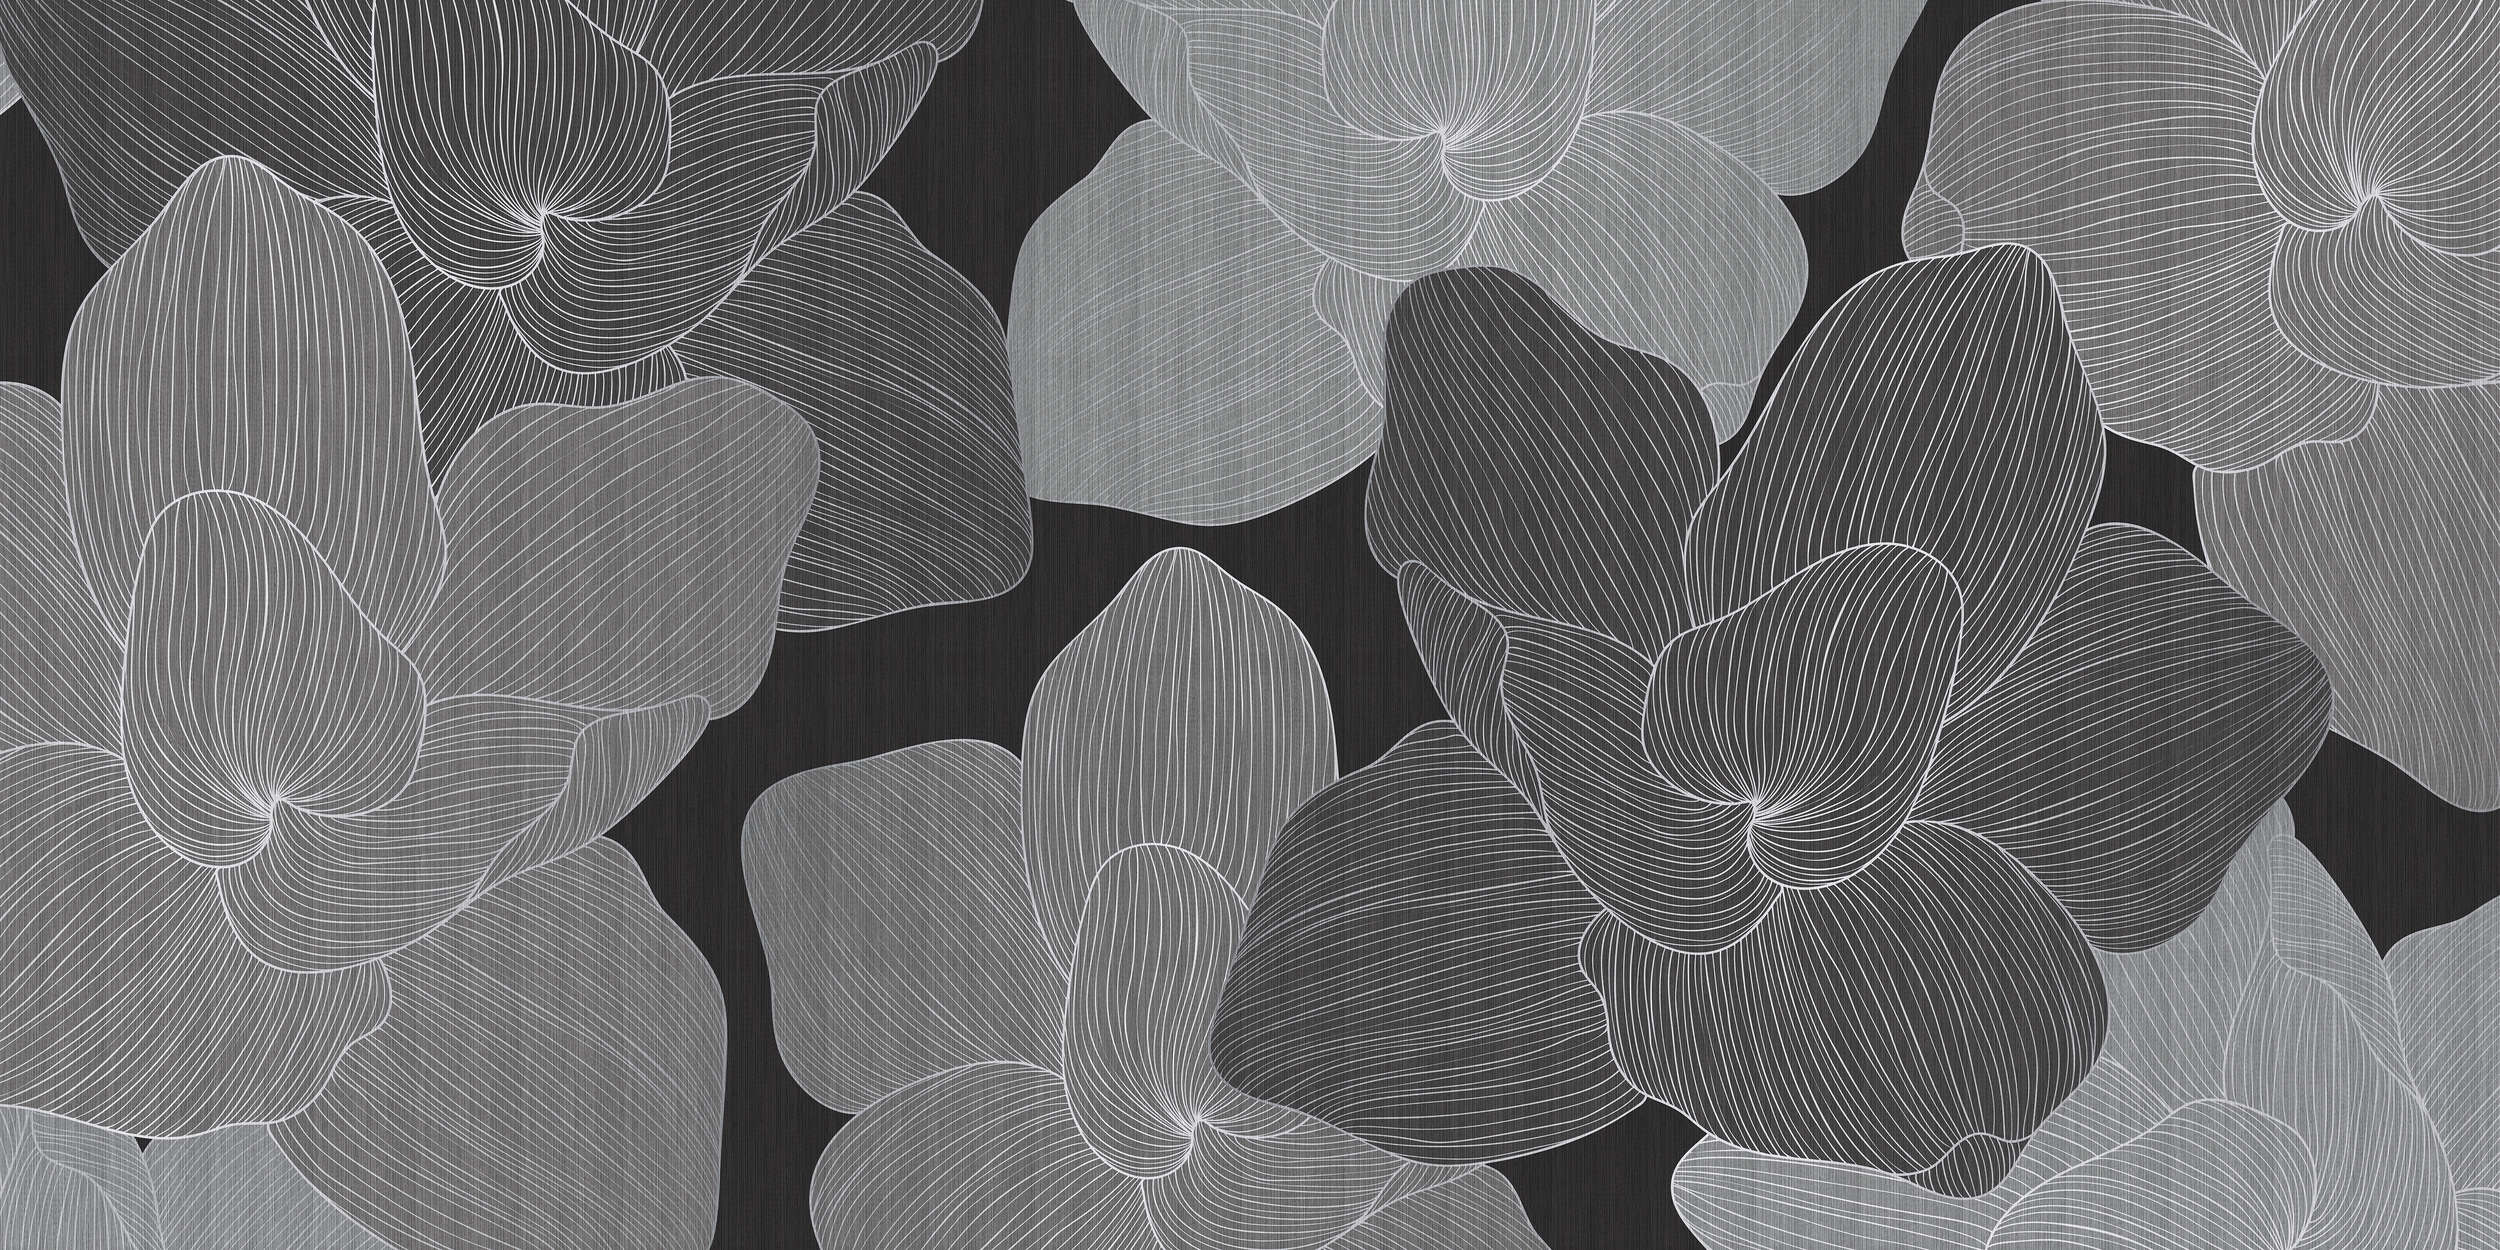             Secret Place 1 – Monochrome Fototapete Blumen, Schwarz & Grau
        